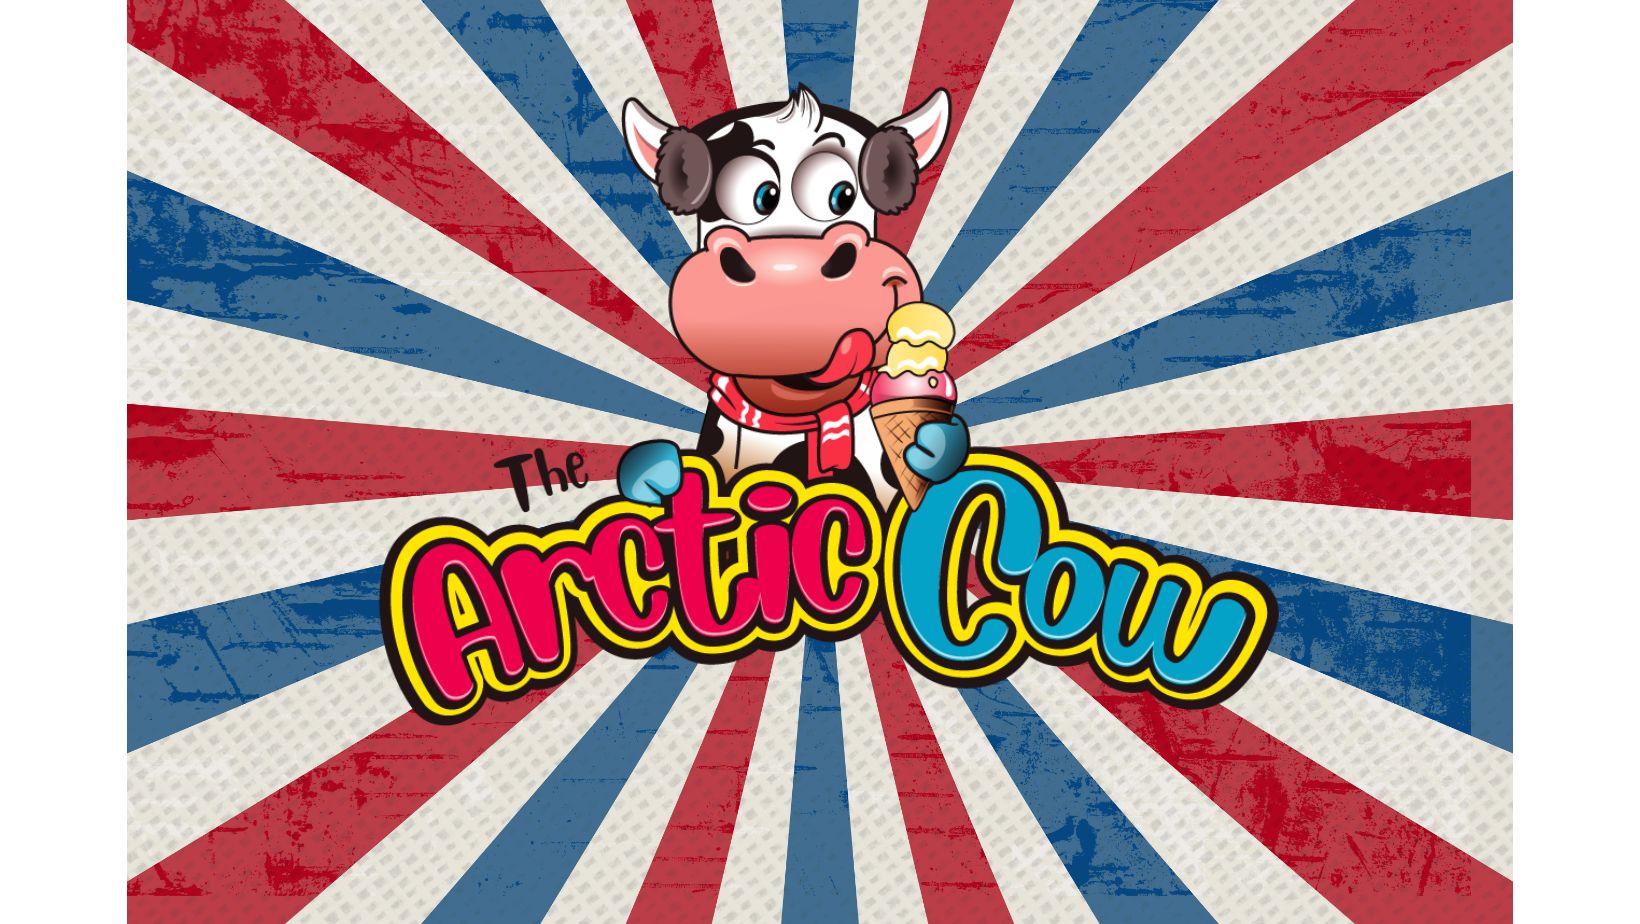 The Arctic Cow